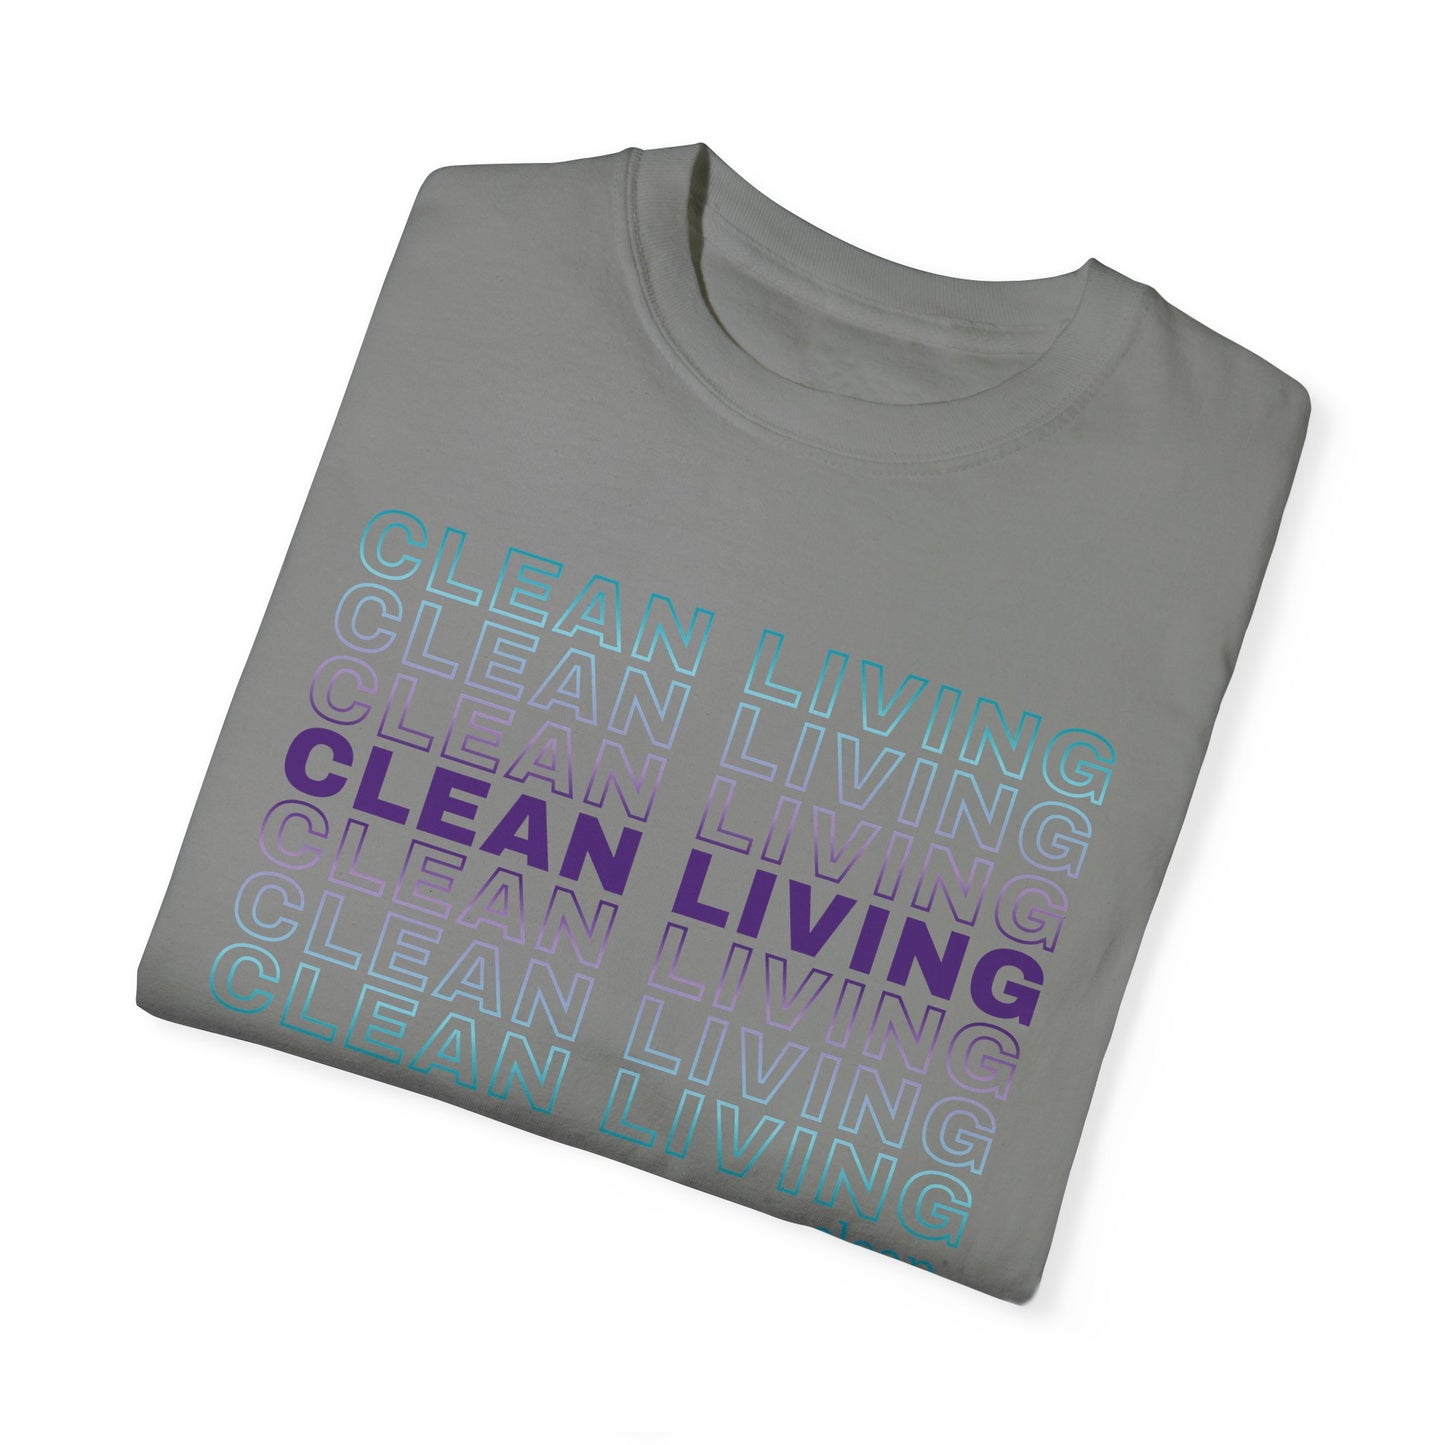 Clean Living Garment-Dyed T-shirt